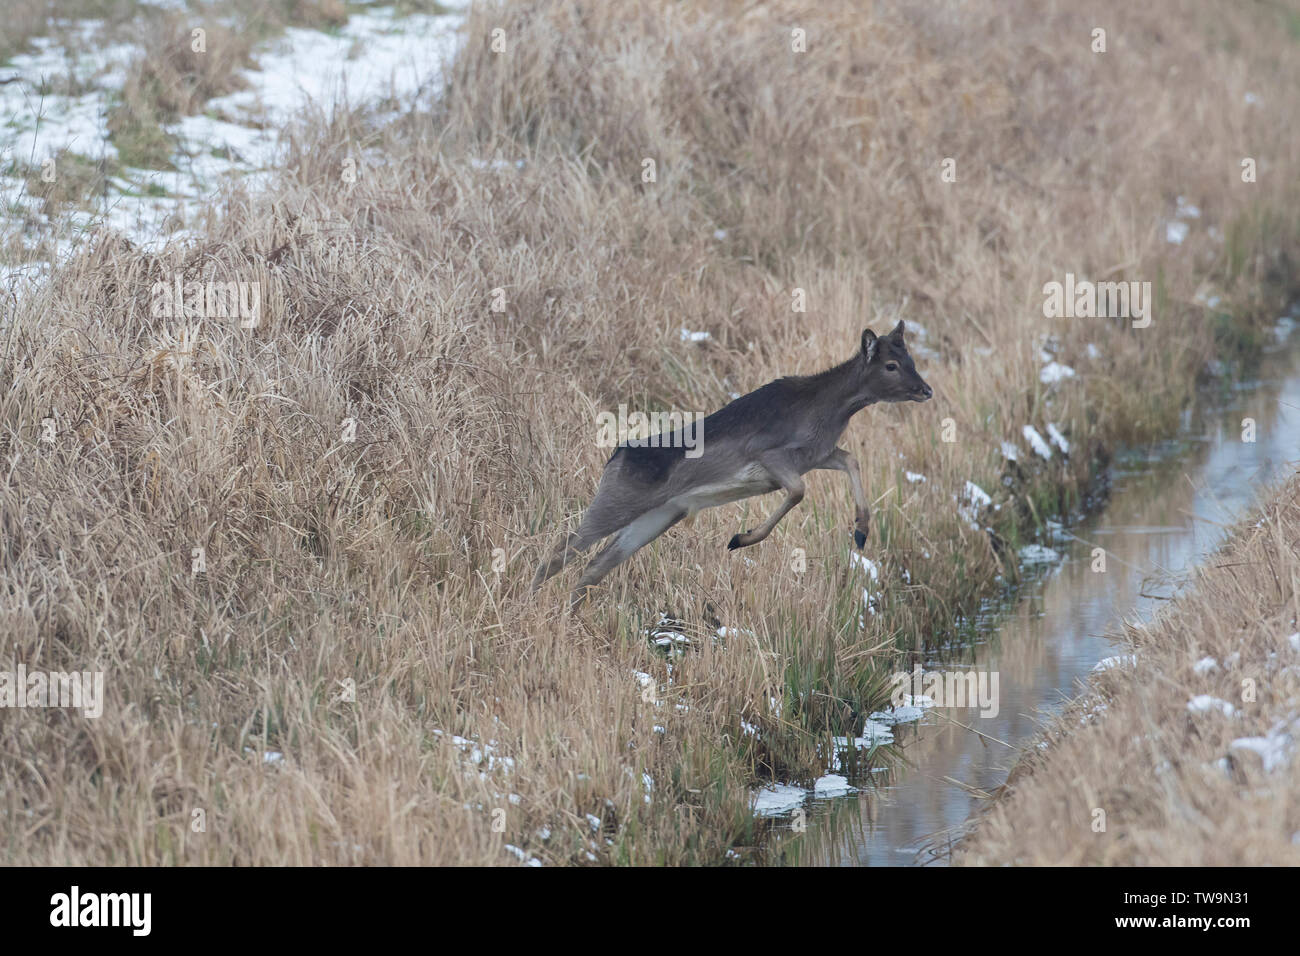 Juvenile Fallow Deer (Dama dama) jumping over a ditch. Germany Stock Photo